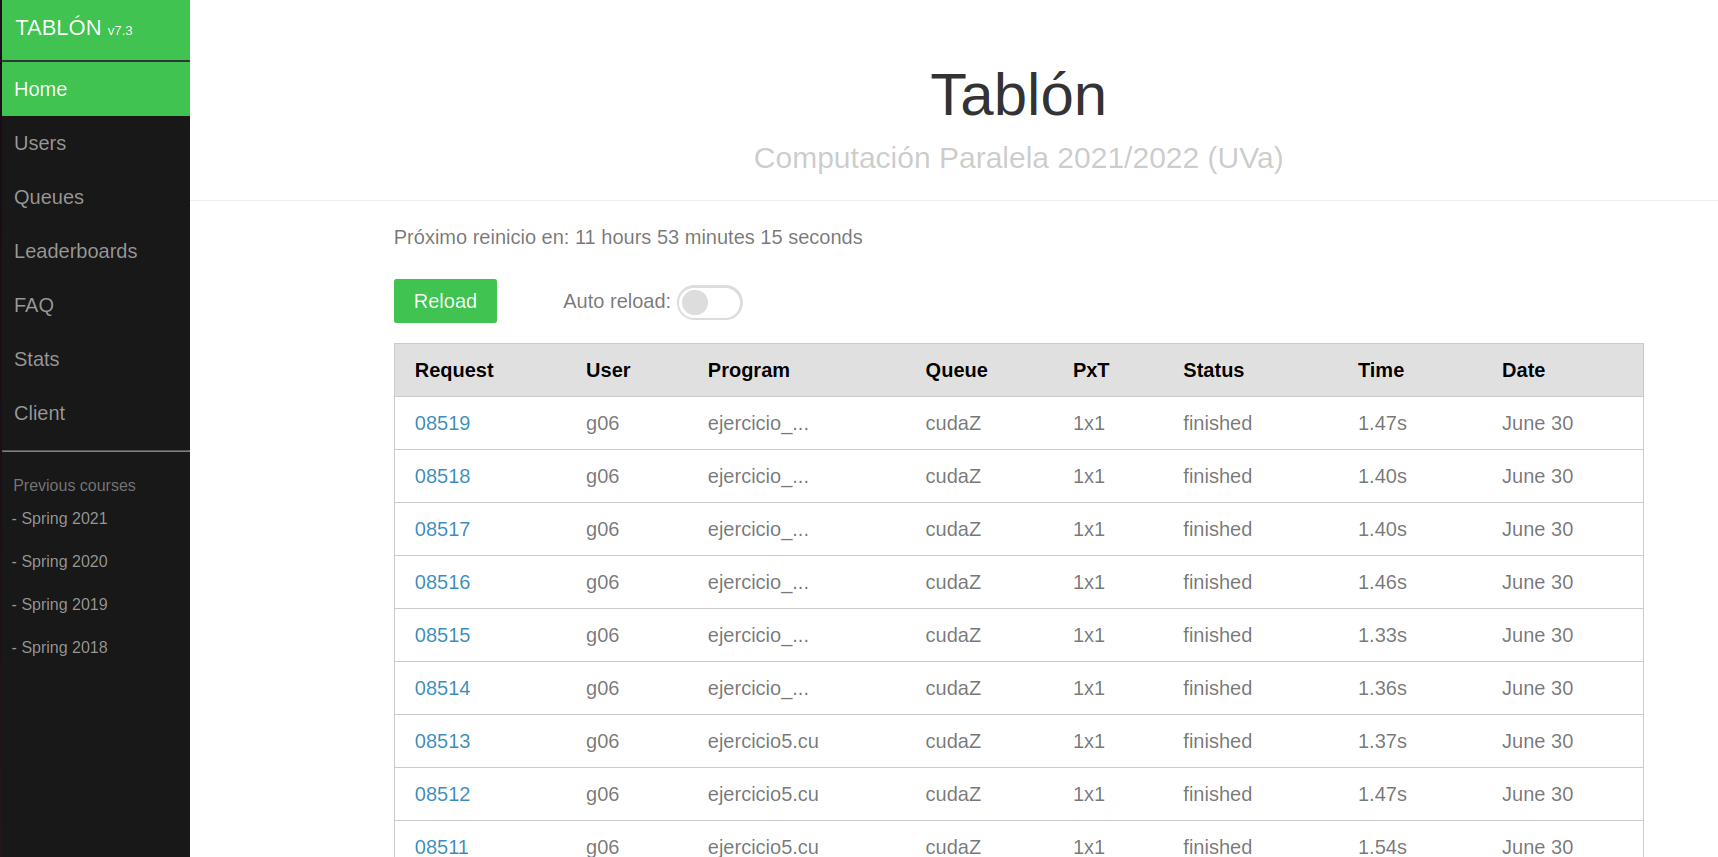 Tablon: Main web page showing last requests